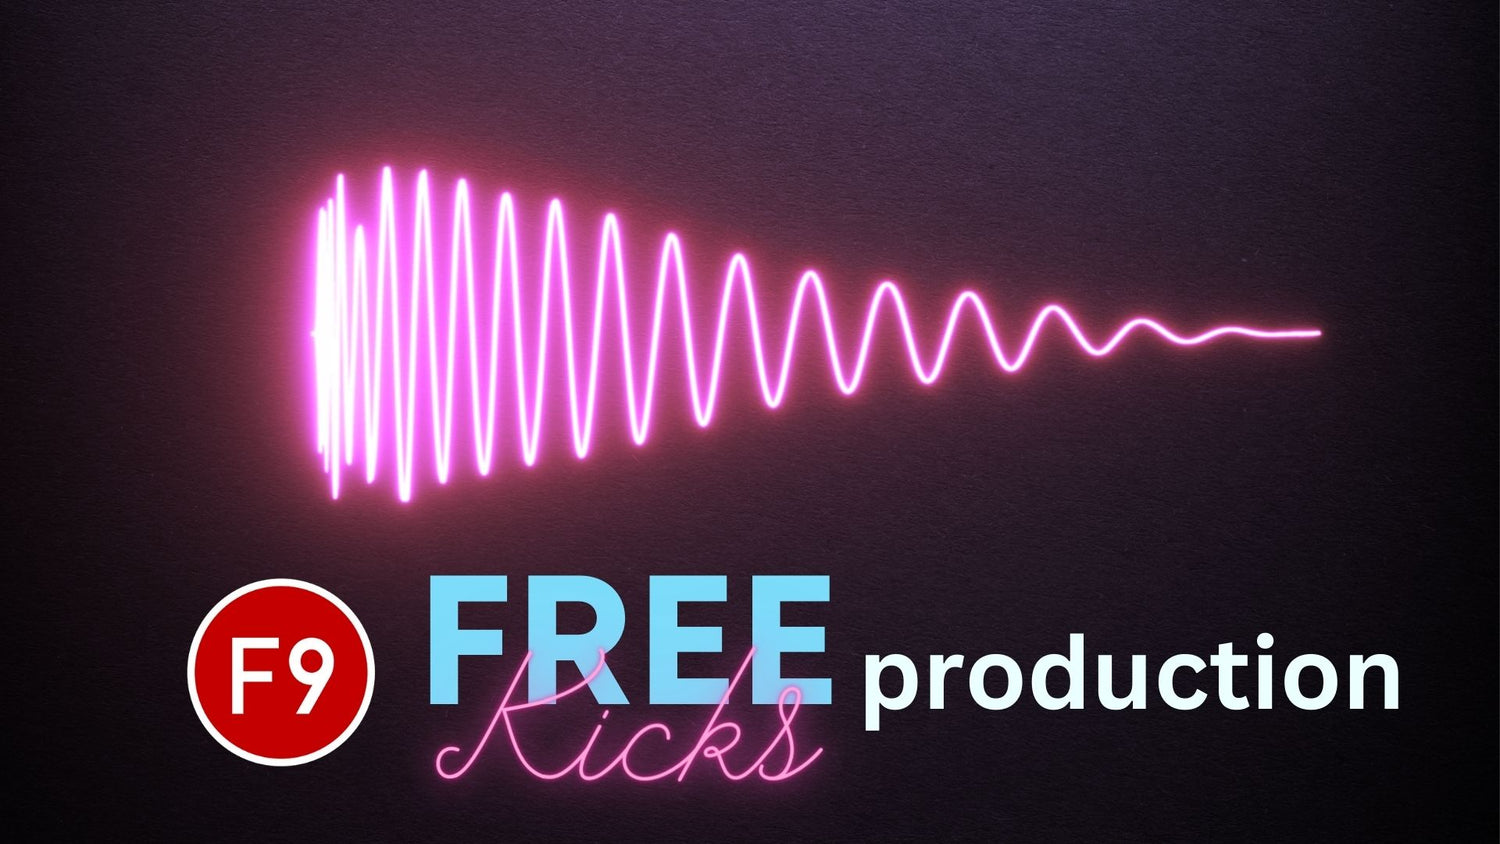 F9 Free Production Kick drums